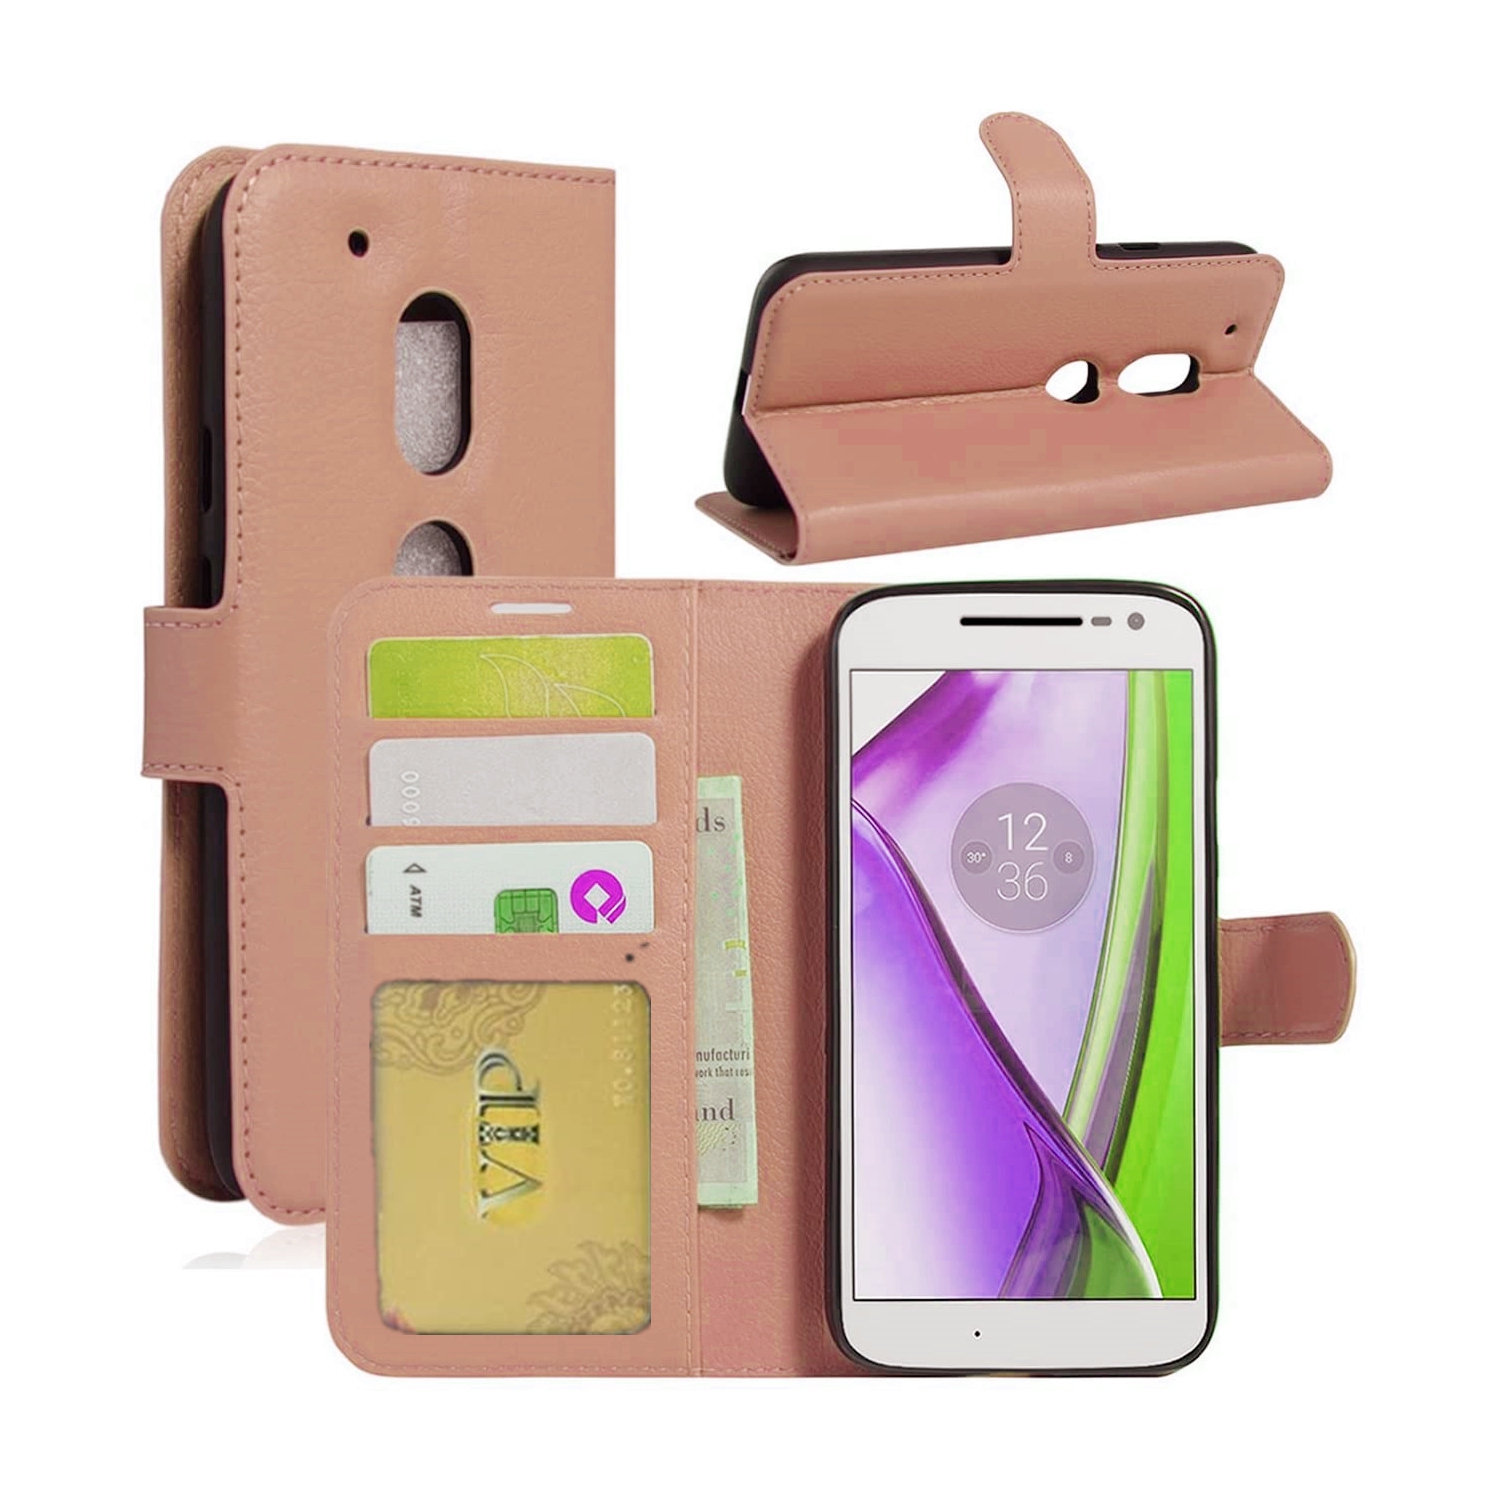 【CSmart】 Magnetic Card Slot Leather Folio Wallet Flip Case Cover for Motorola Moto G6 Play, Rose Gold